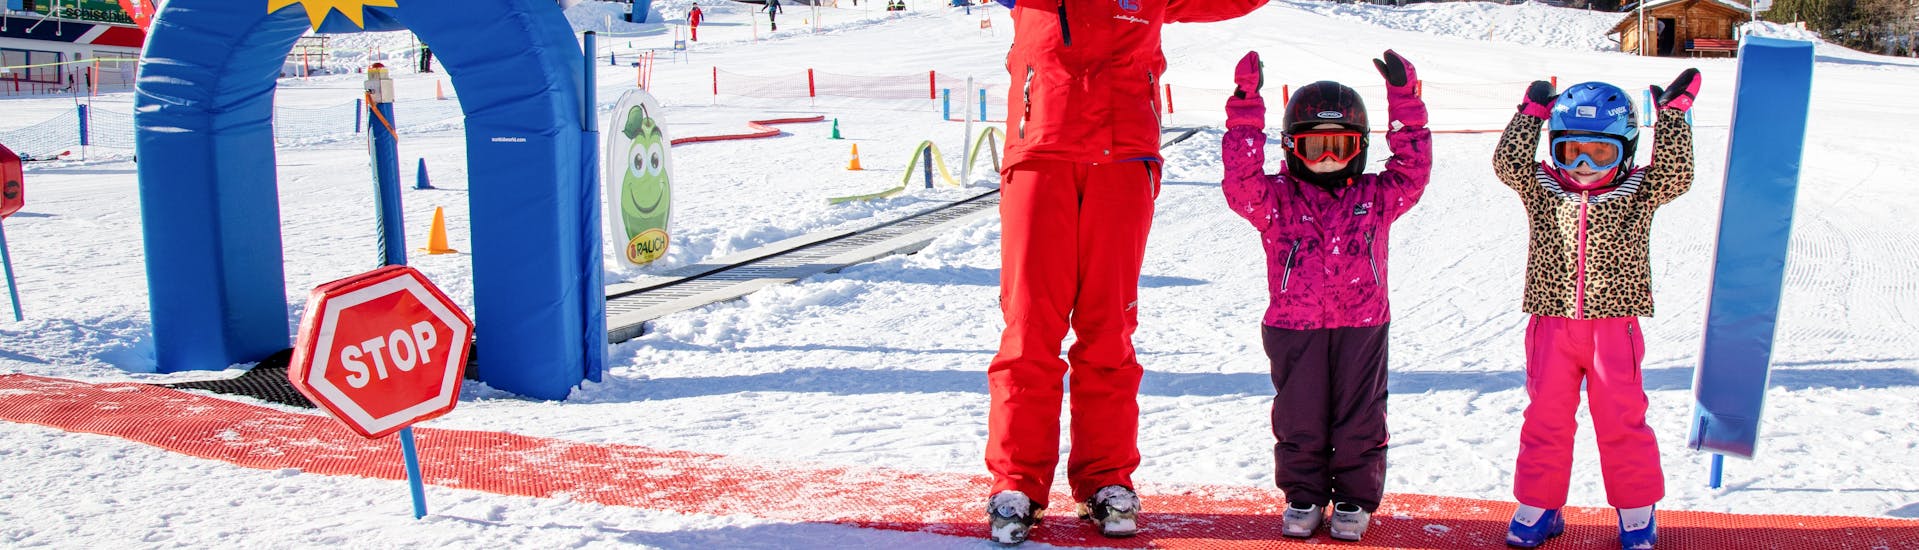 Child laughing in the "Bambini" ski course (3-4 years) - All levels Silvretta Galtür Ski School.